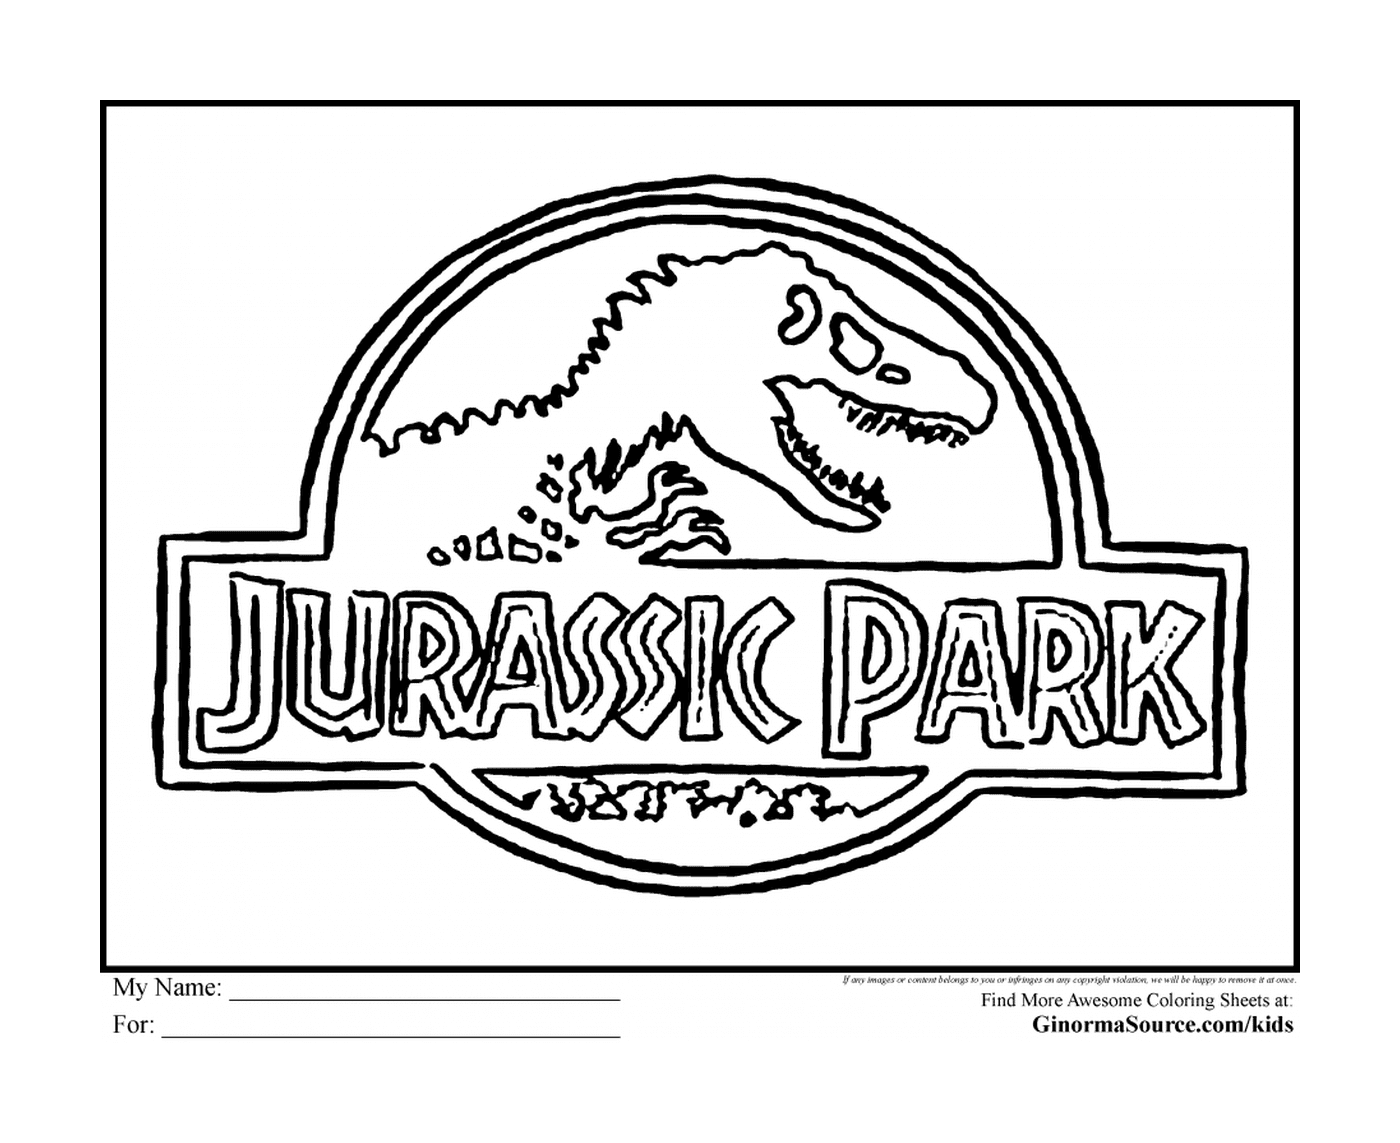 coloriage logo jurassic park